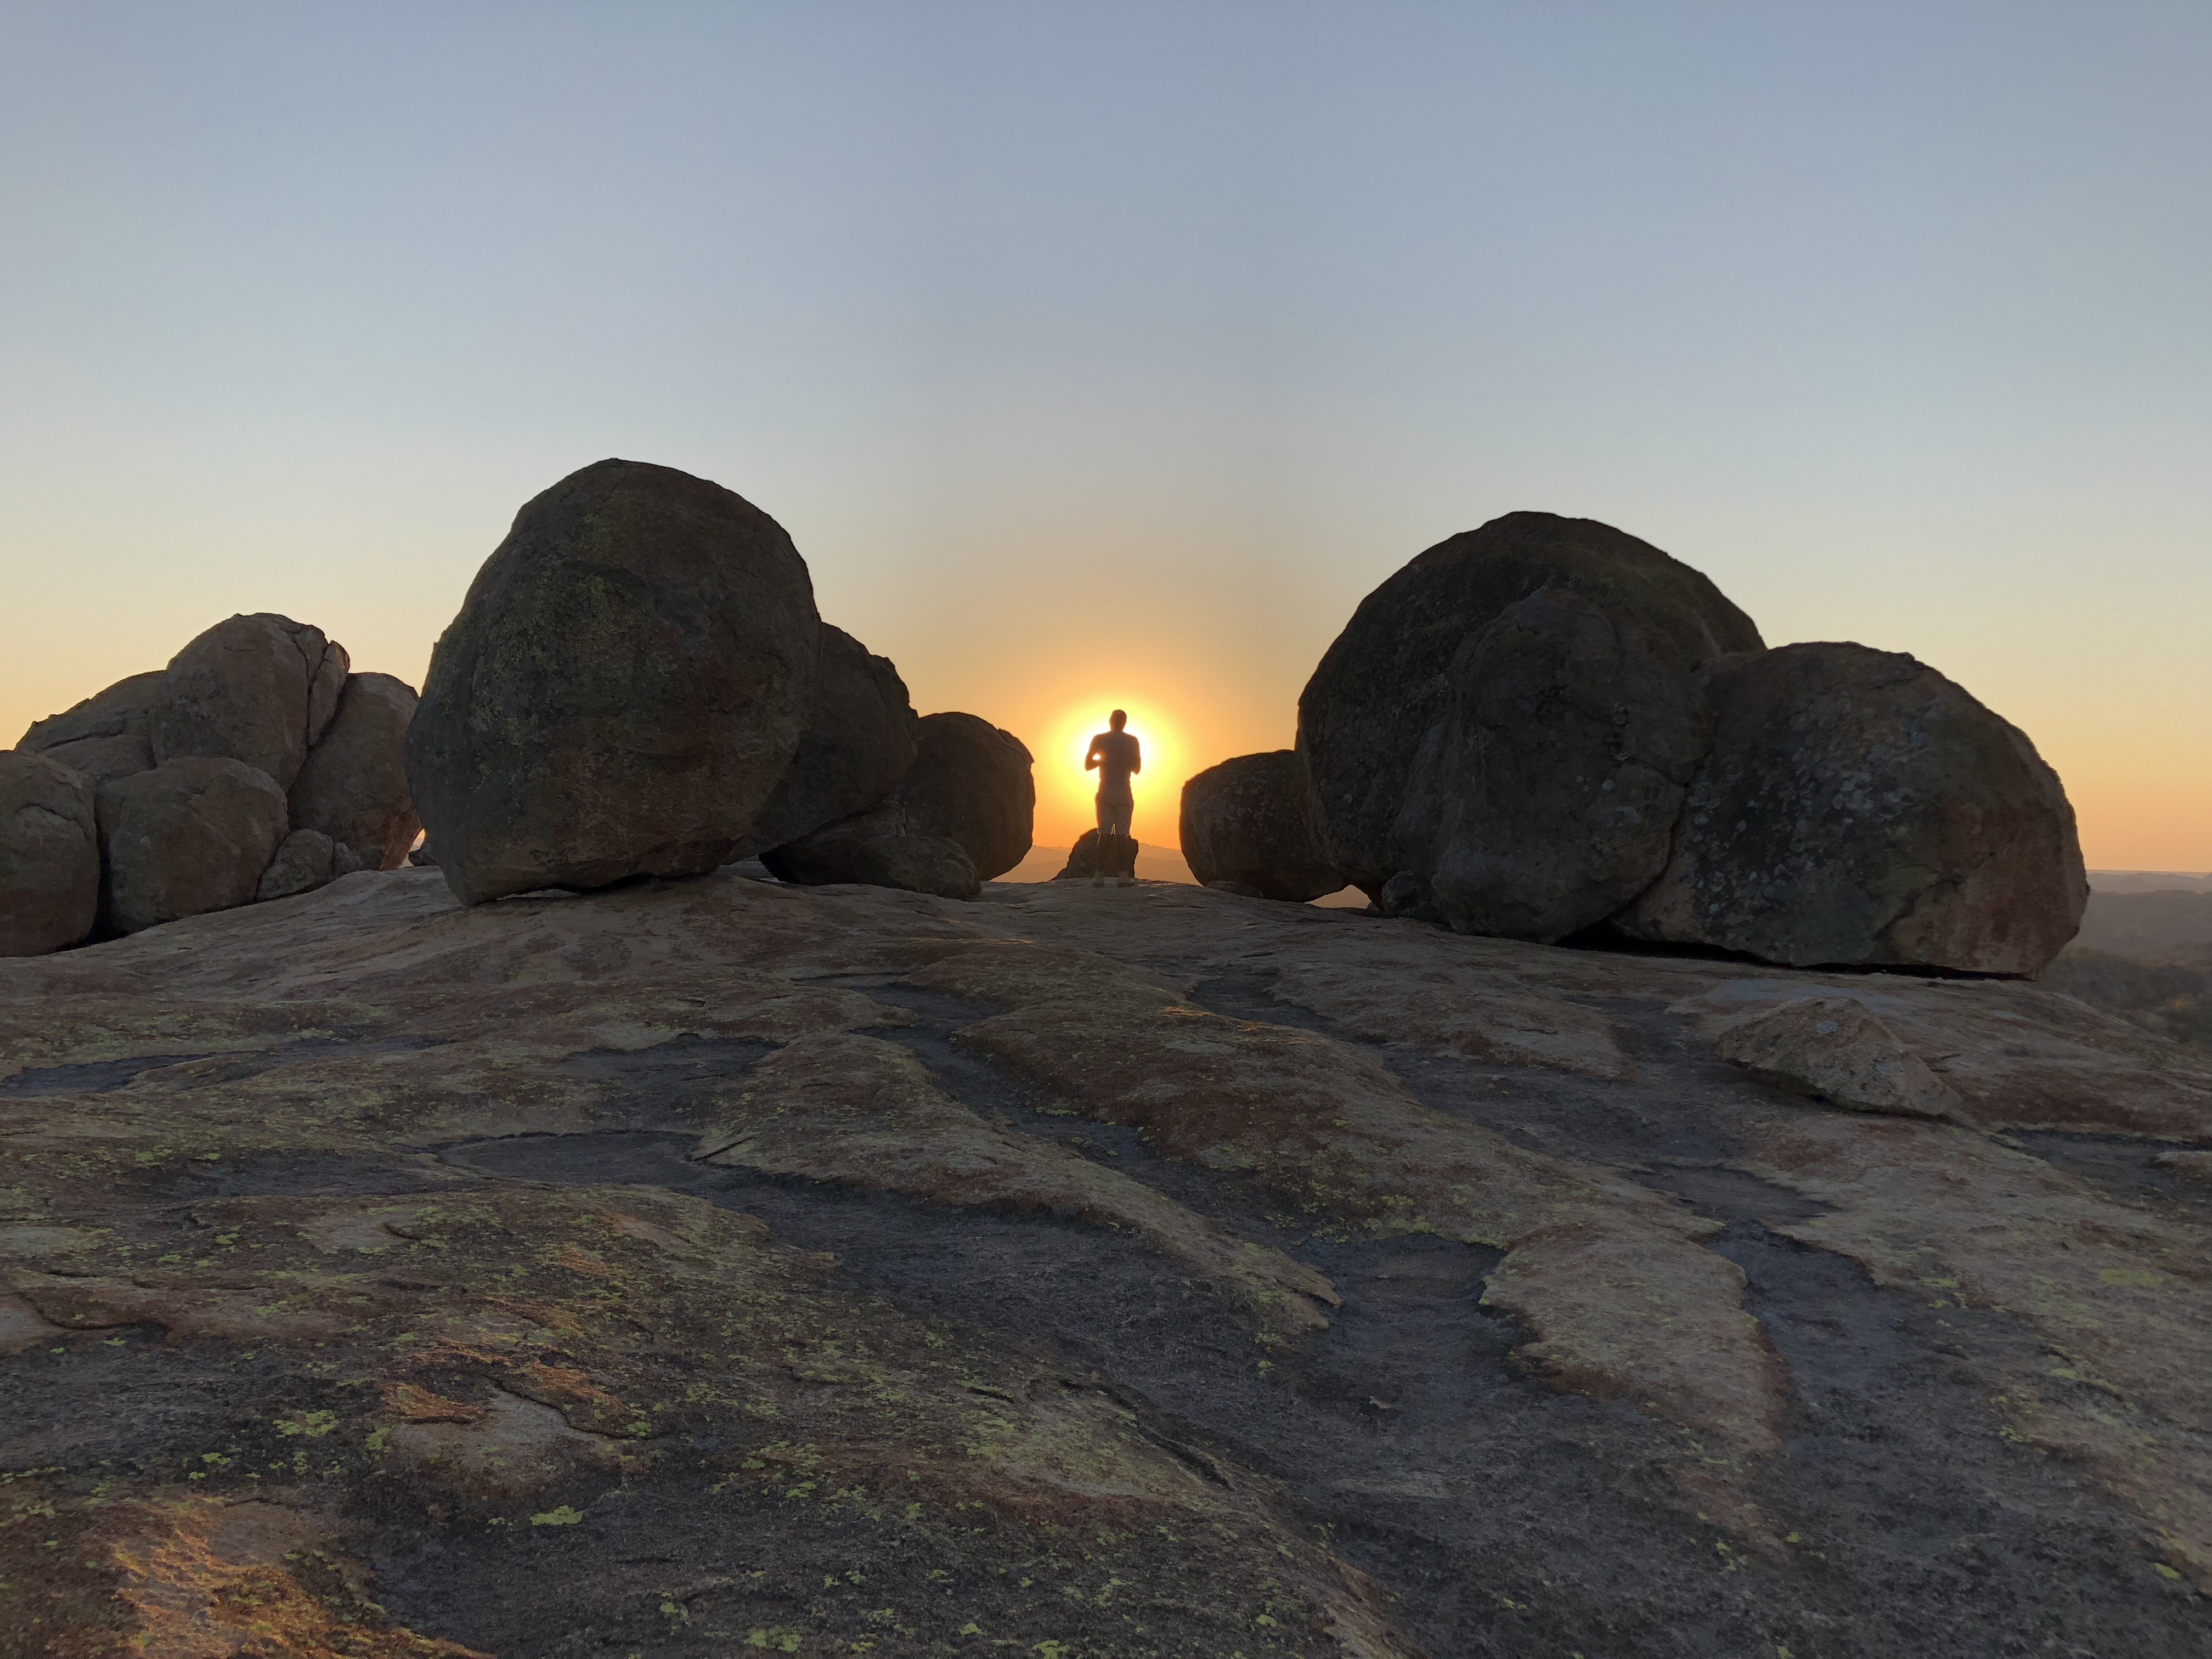 Boulder sunset, Zimbabwean solitude